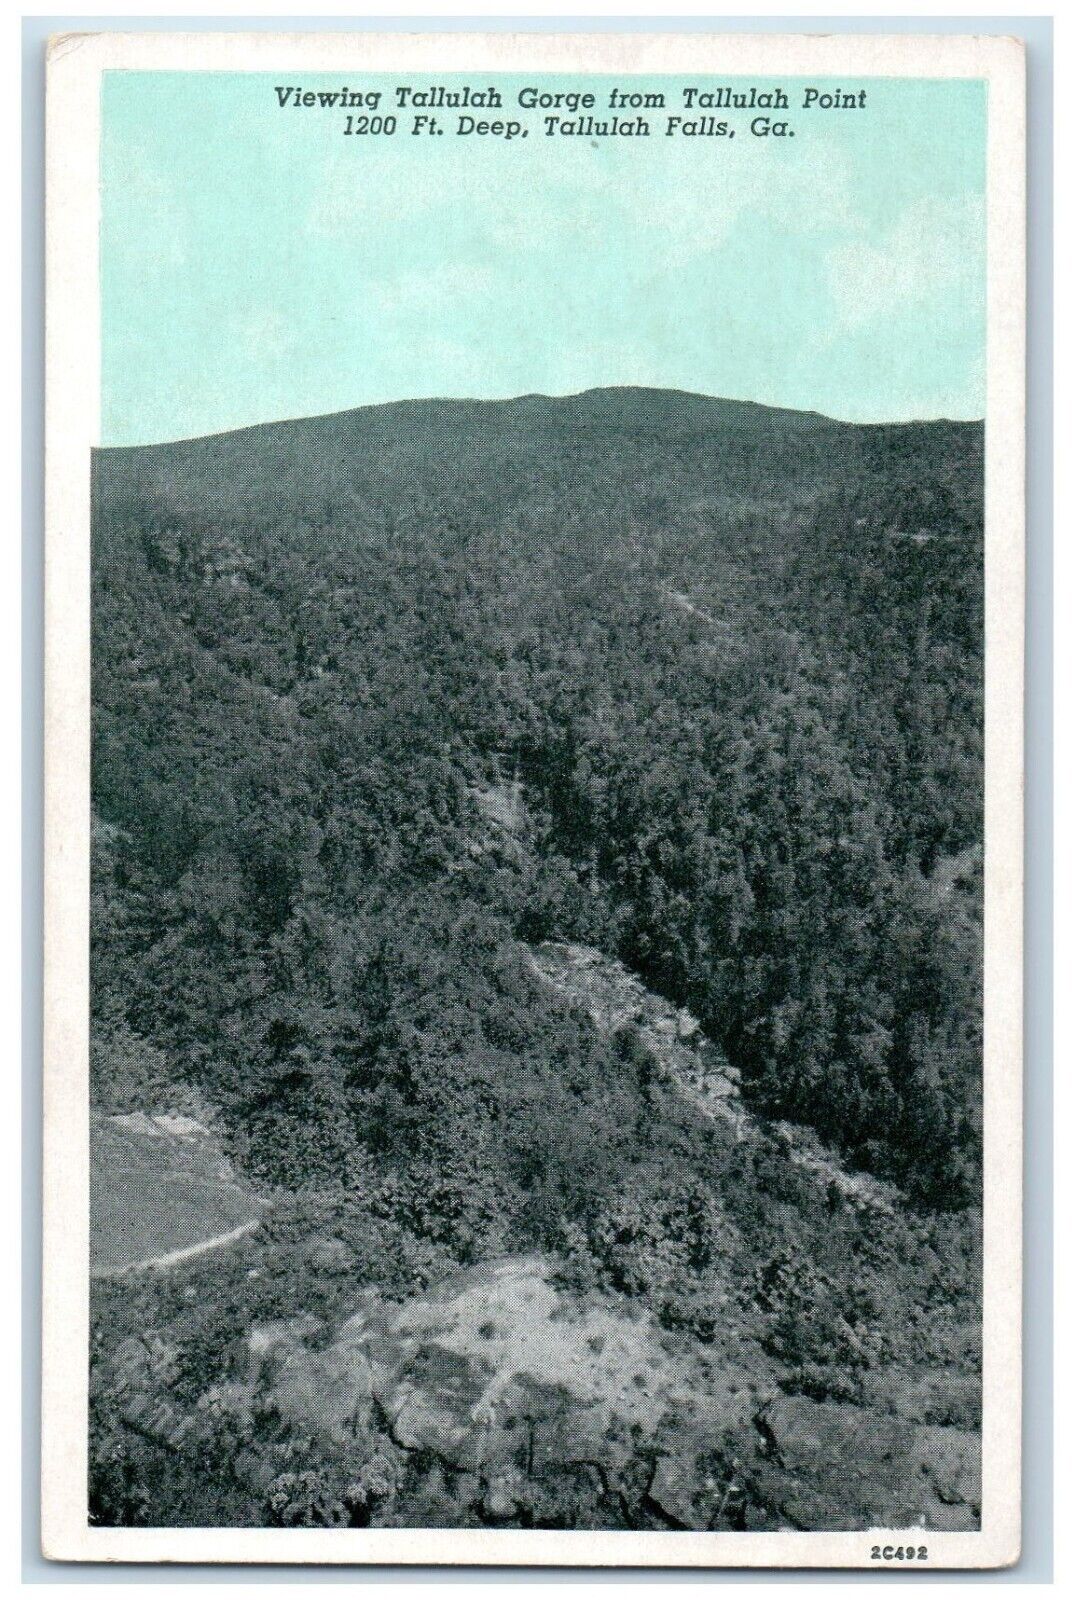 c1930's Viewing Tallulah Gorge From Tallulah Point Tallulah Falls GA Postcard